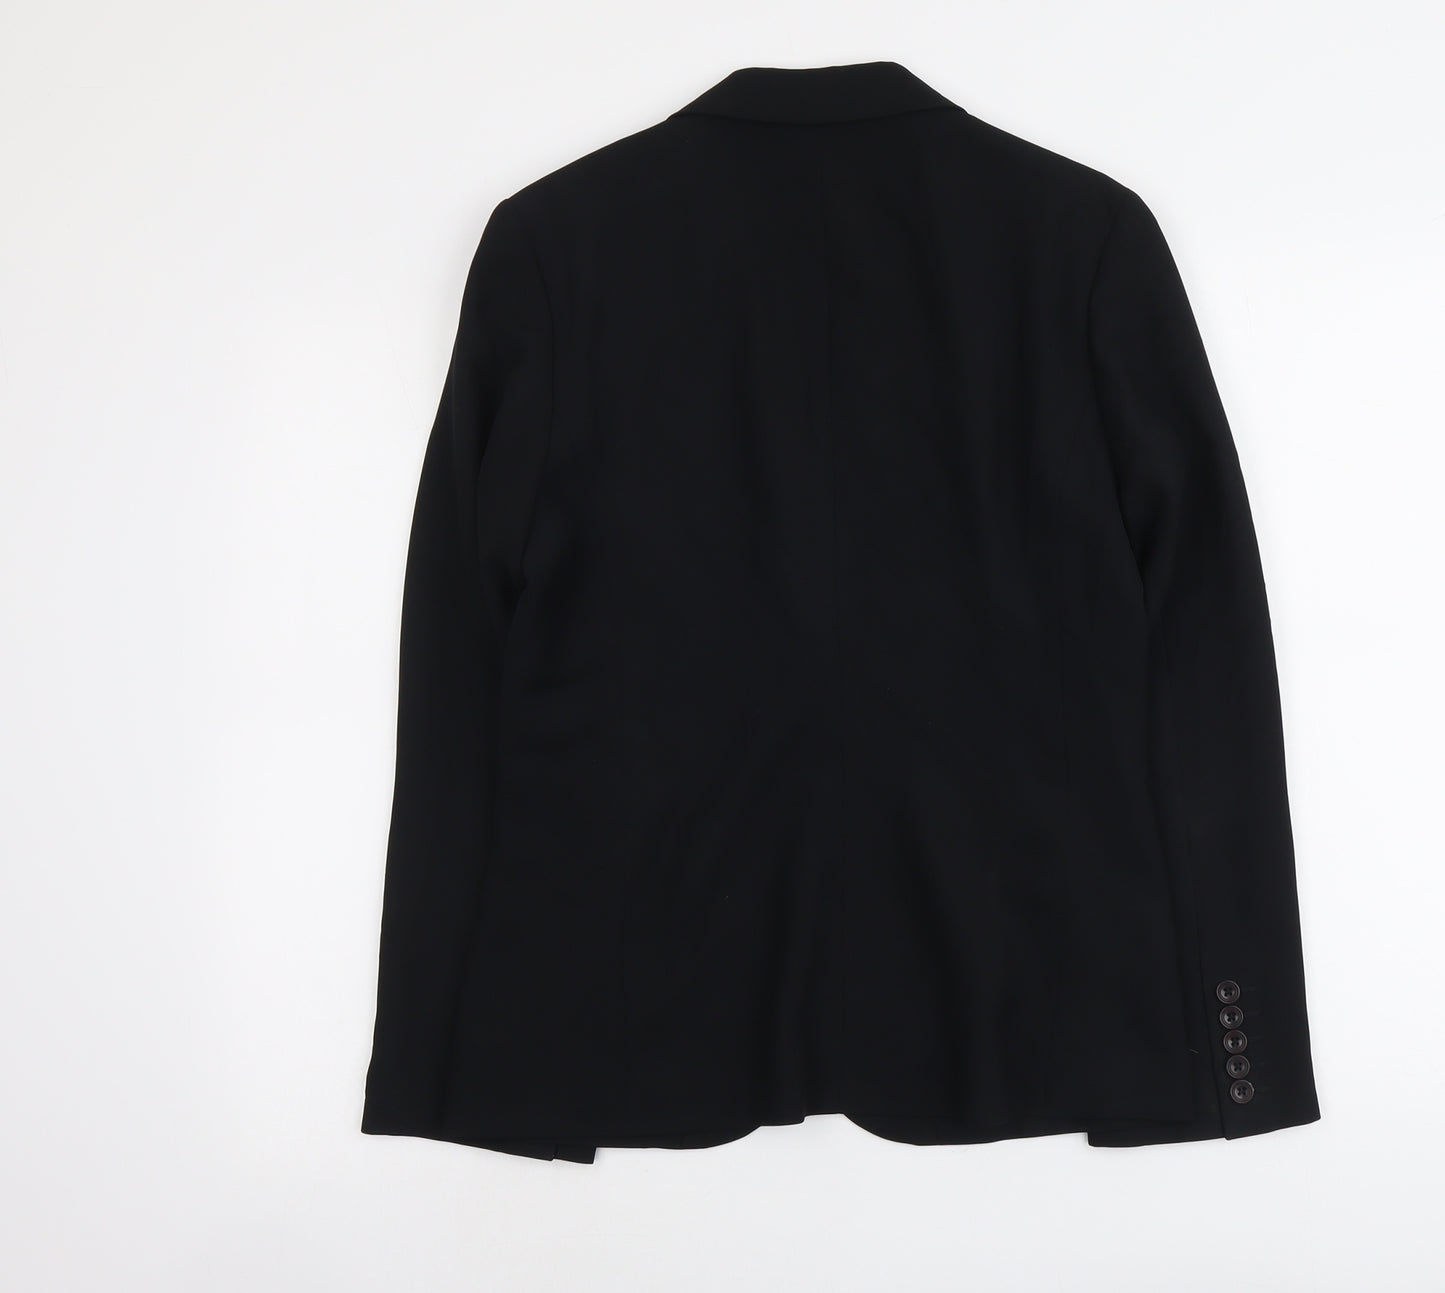 Essentials Womens Black Polyester Jacket Suit Jacket Size 10 - Five-Button Jacket Sleeve